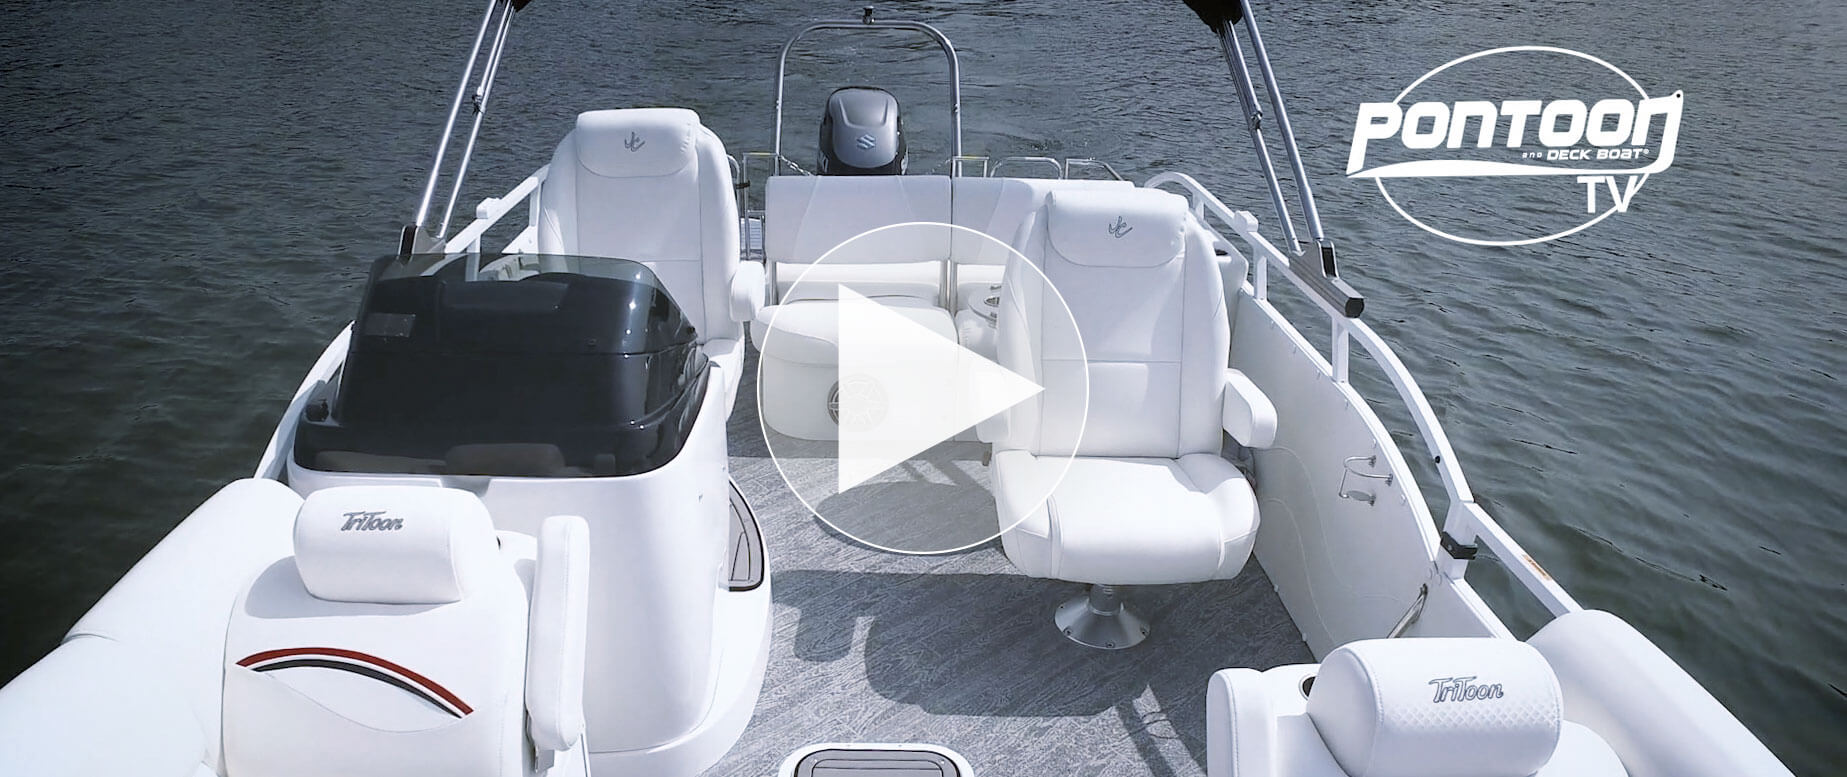 Pontoon & Deck Boat Magazine 2020 Shootout Video featuring the SportToon 26TT HTH Swing Back